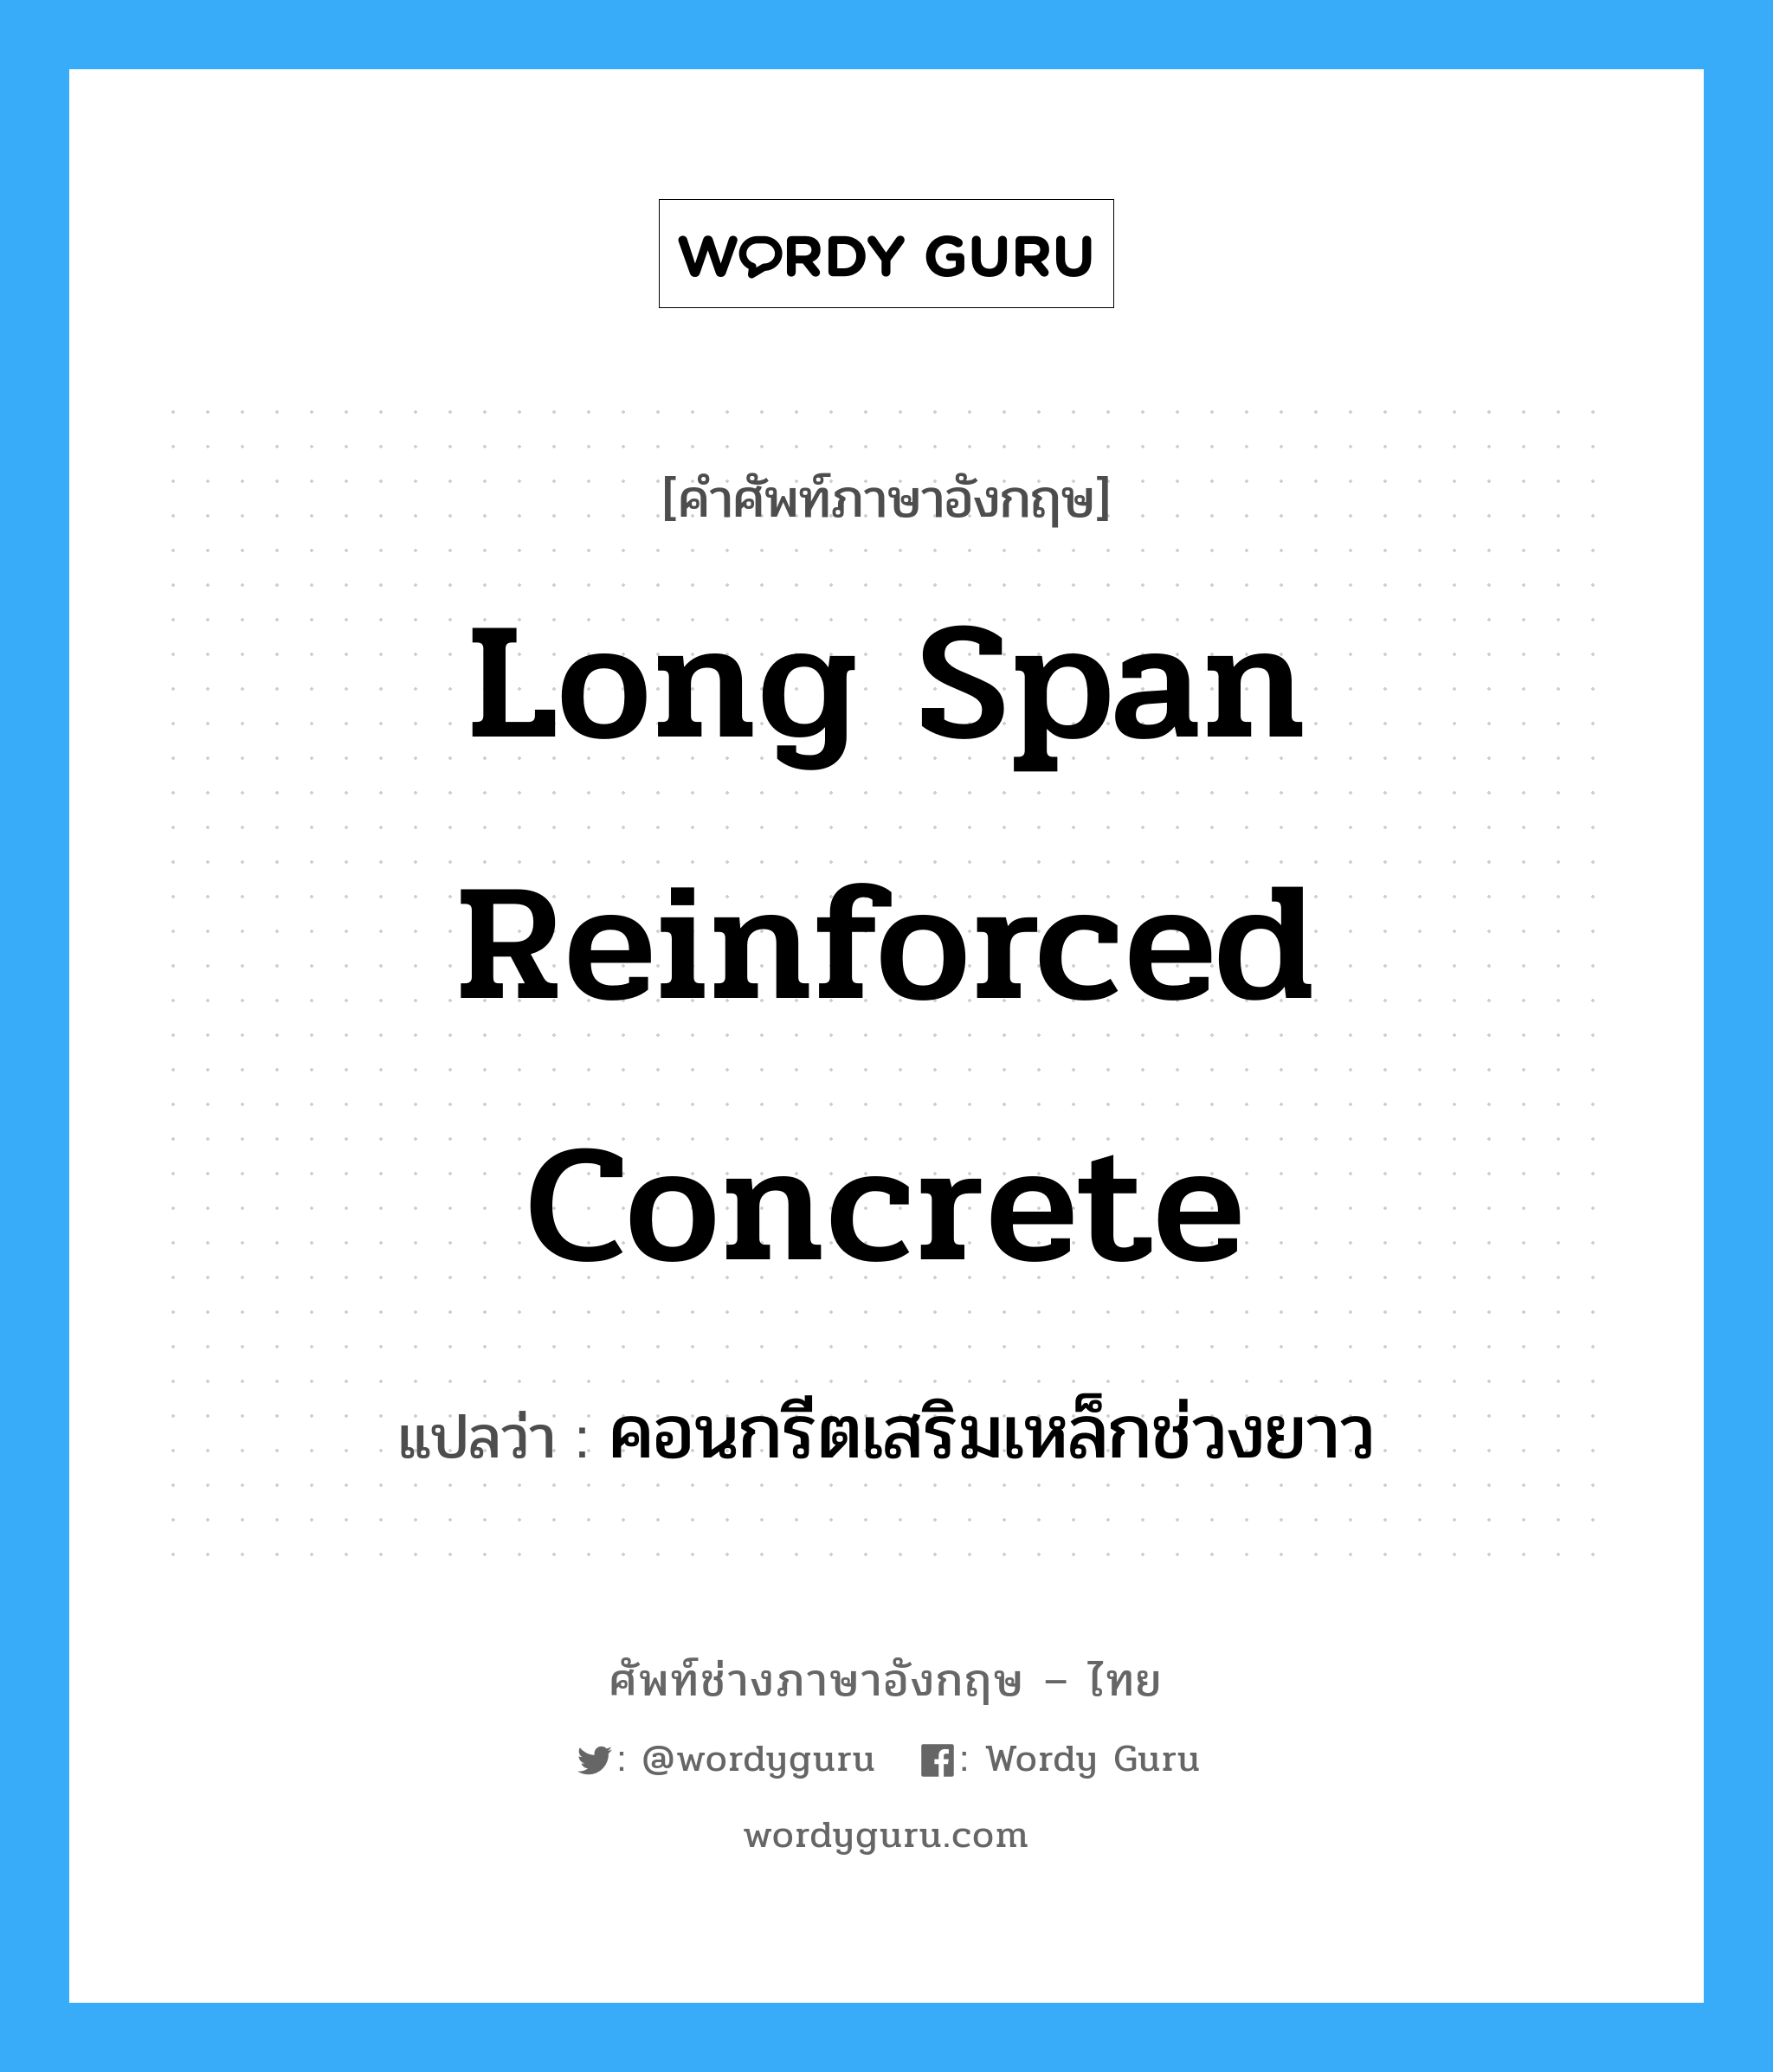 long span reinforced concrete แปลว่า?, คำศัพท์ช่างภาษาอังกฤษ - ไทย long span reinforced concrete คำศัพท์ภาษาอังกฤษ long span reinforced concrete แปลว่า คอนกรีตเสริมเหล็กช่วงยาว